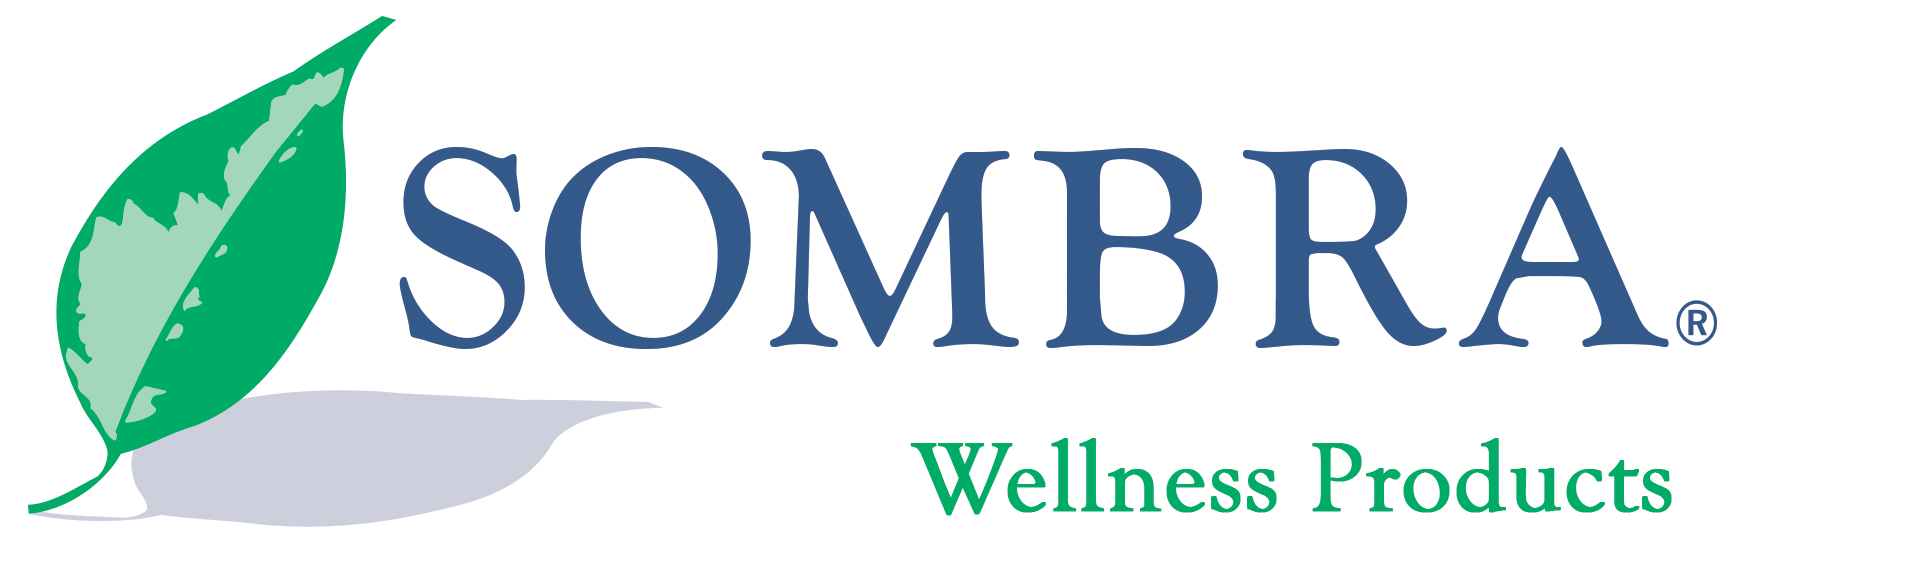 Sombra_Wellness_logo.png